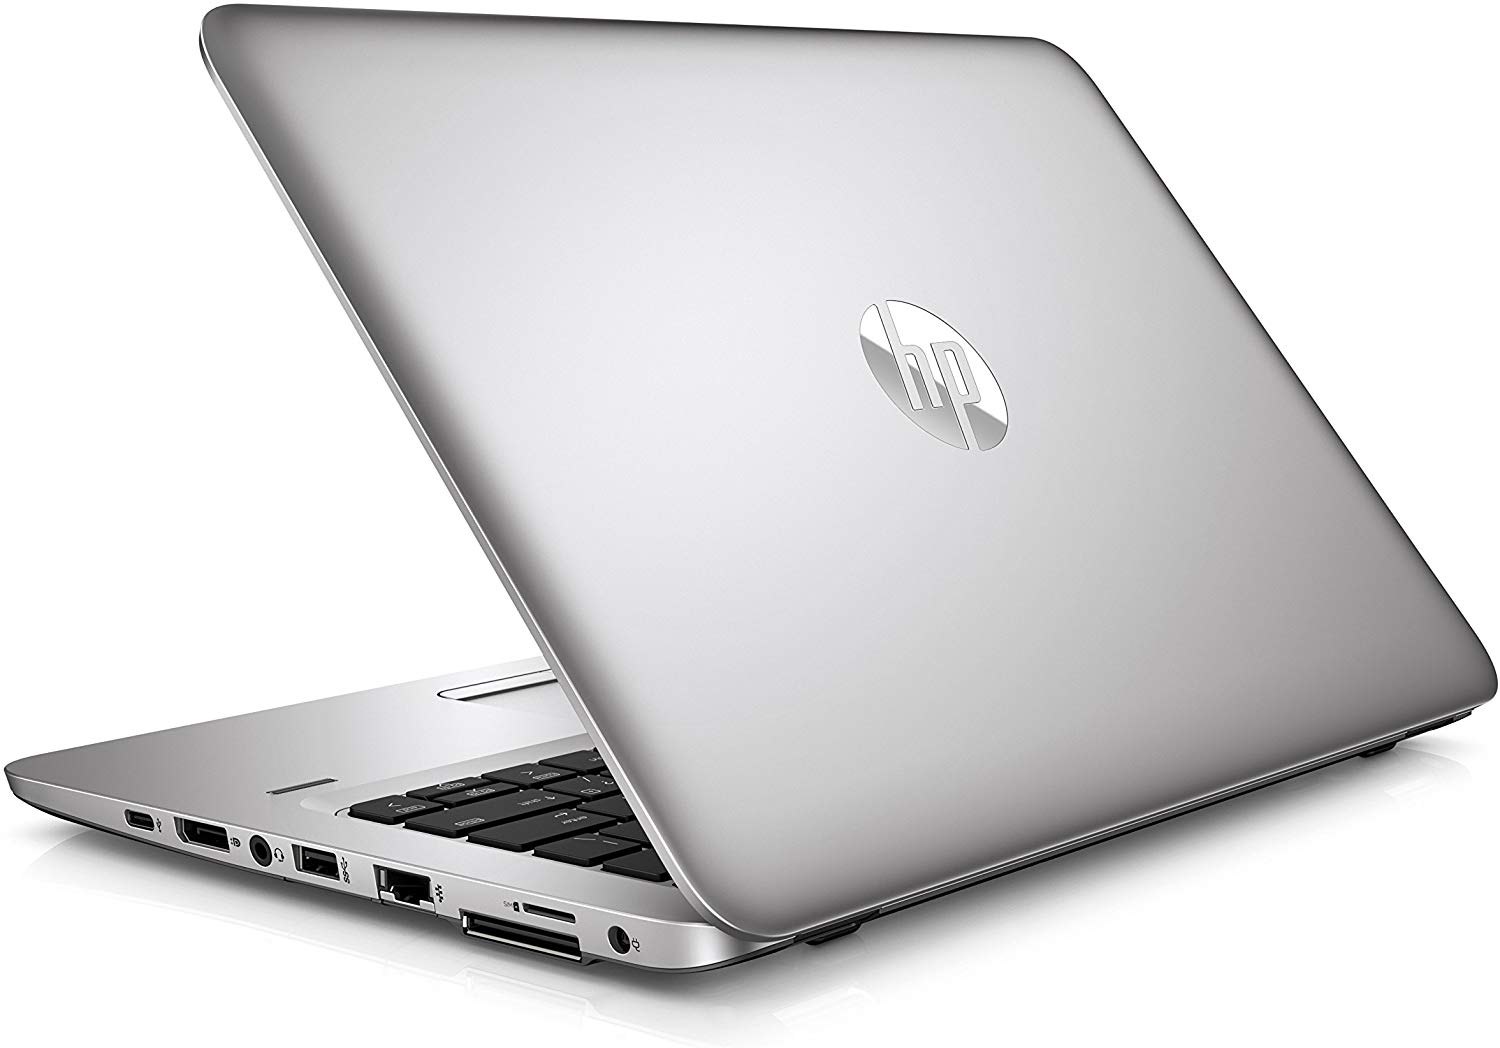 HP EliteBook 820 G3 NOTEBOOK INTEL CORE I5 6300 16GB DDR 4 256GB SSD WINDOWS 10 PRO Grado B